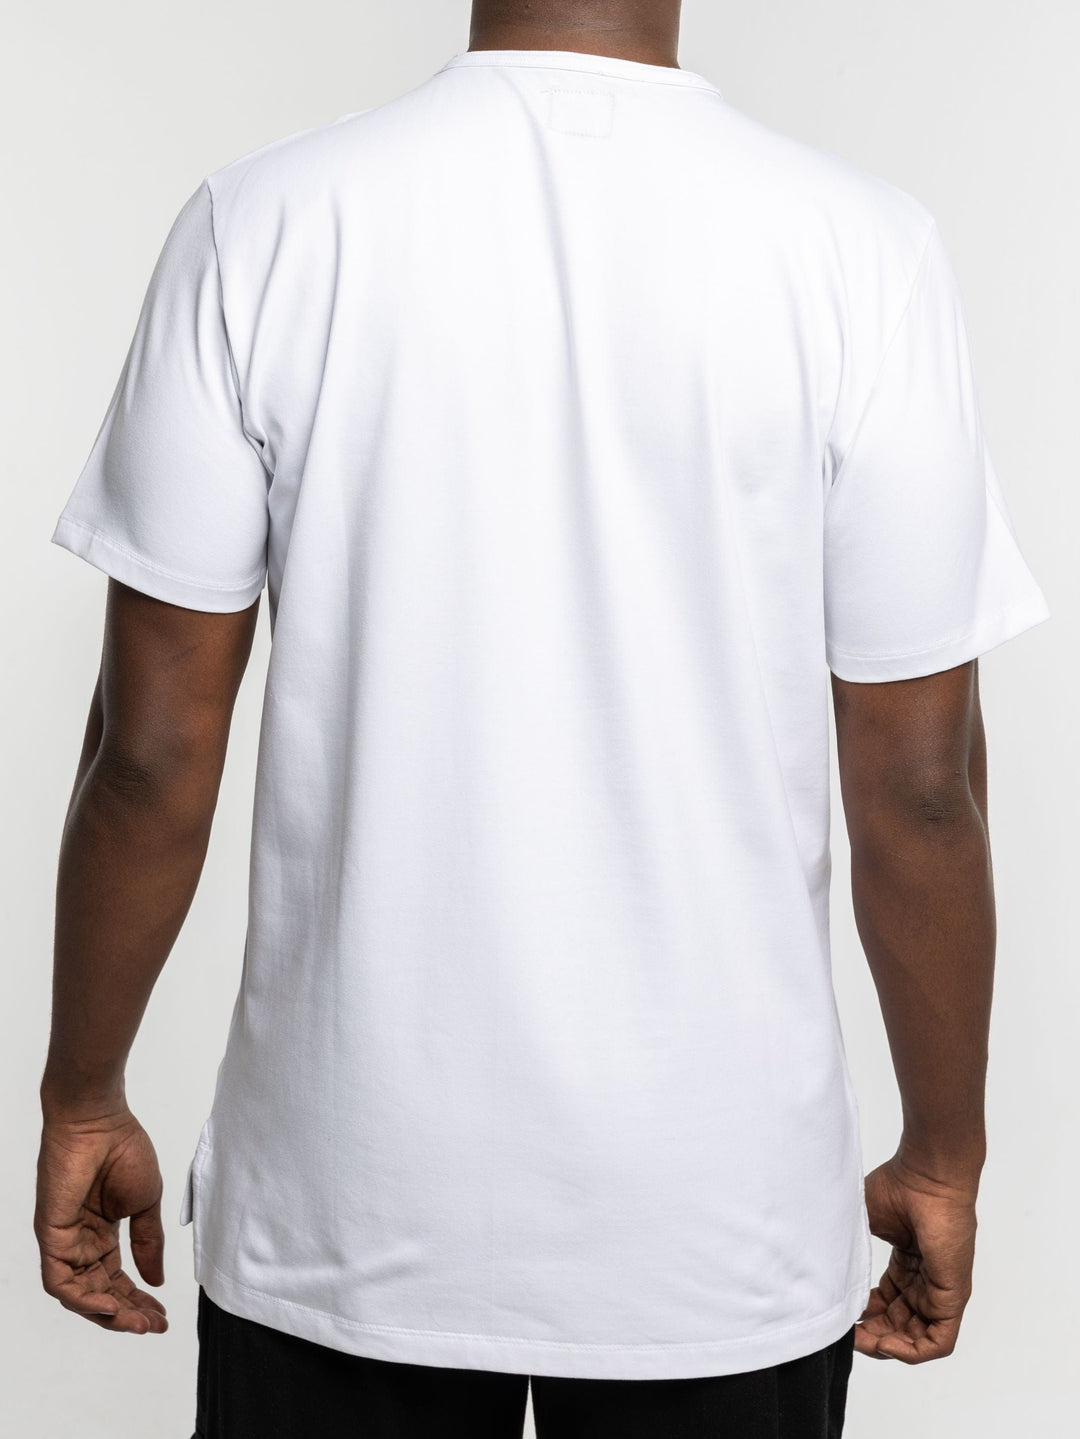 Zhivago x Nuuk Men T-shirt White Split Hem T-Shirt: SLS Comfort